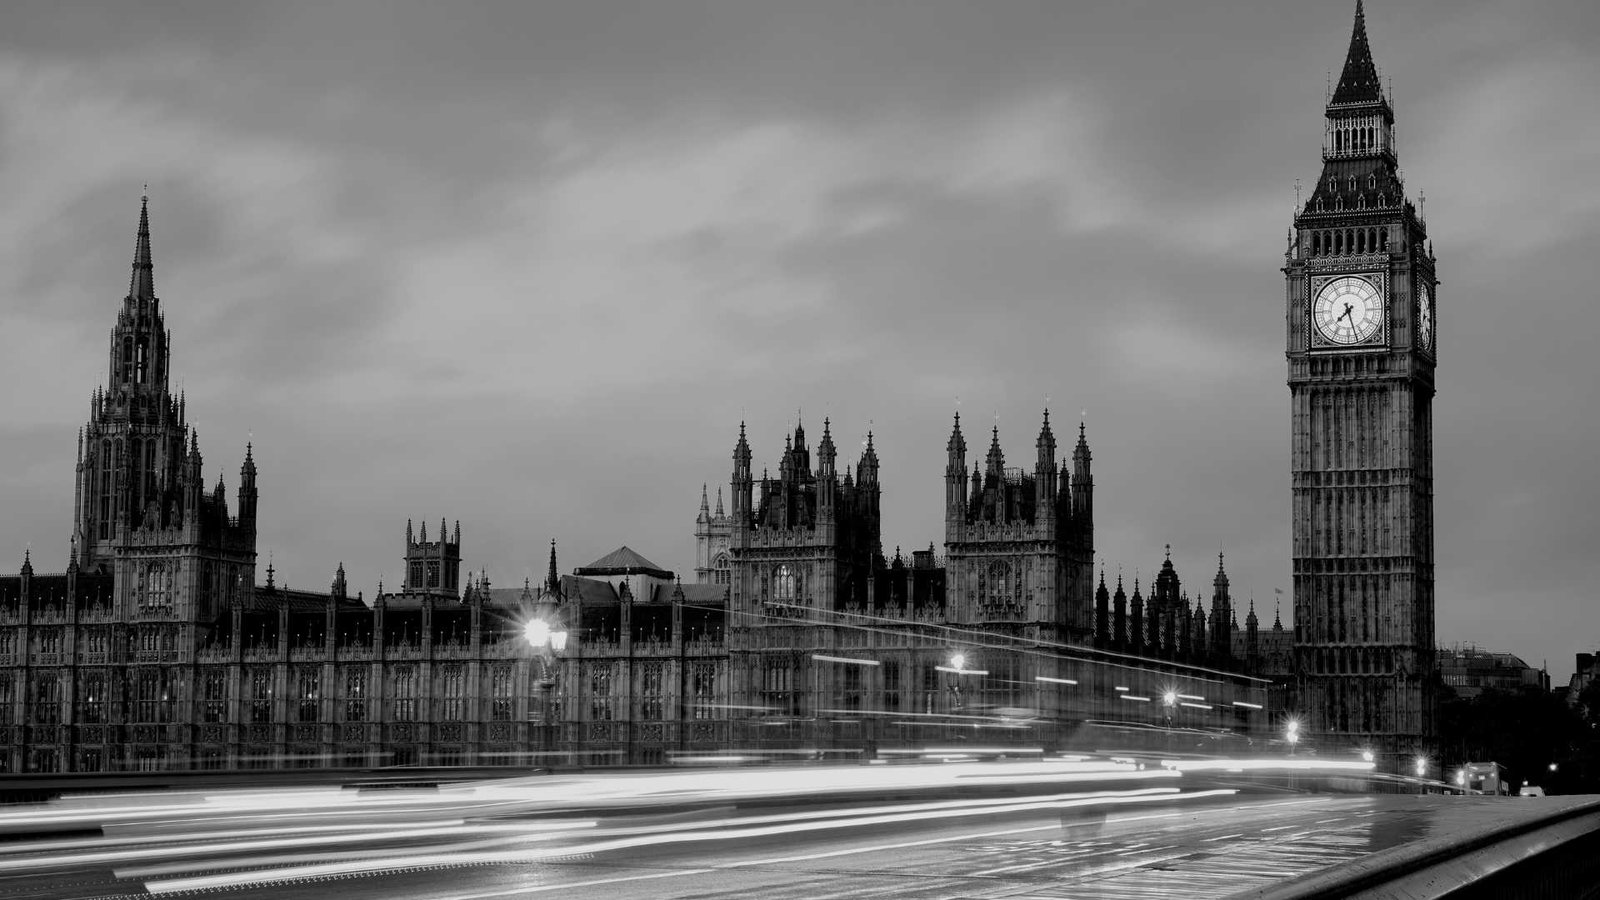 An image of UK Parliament